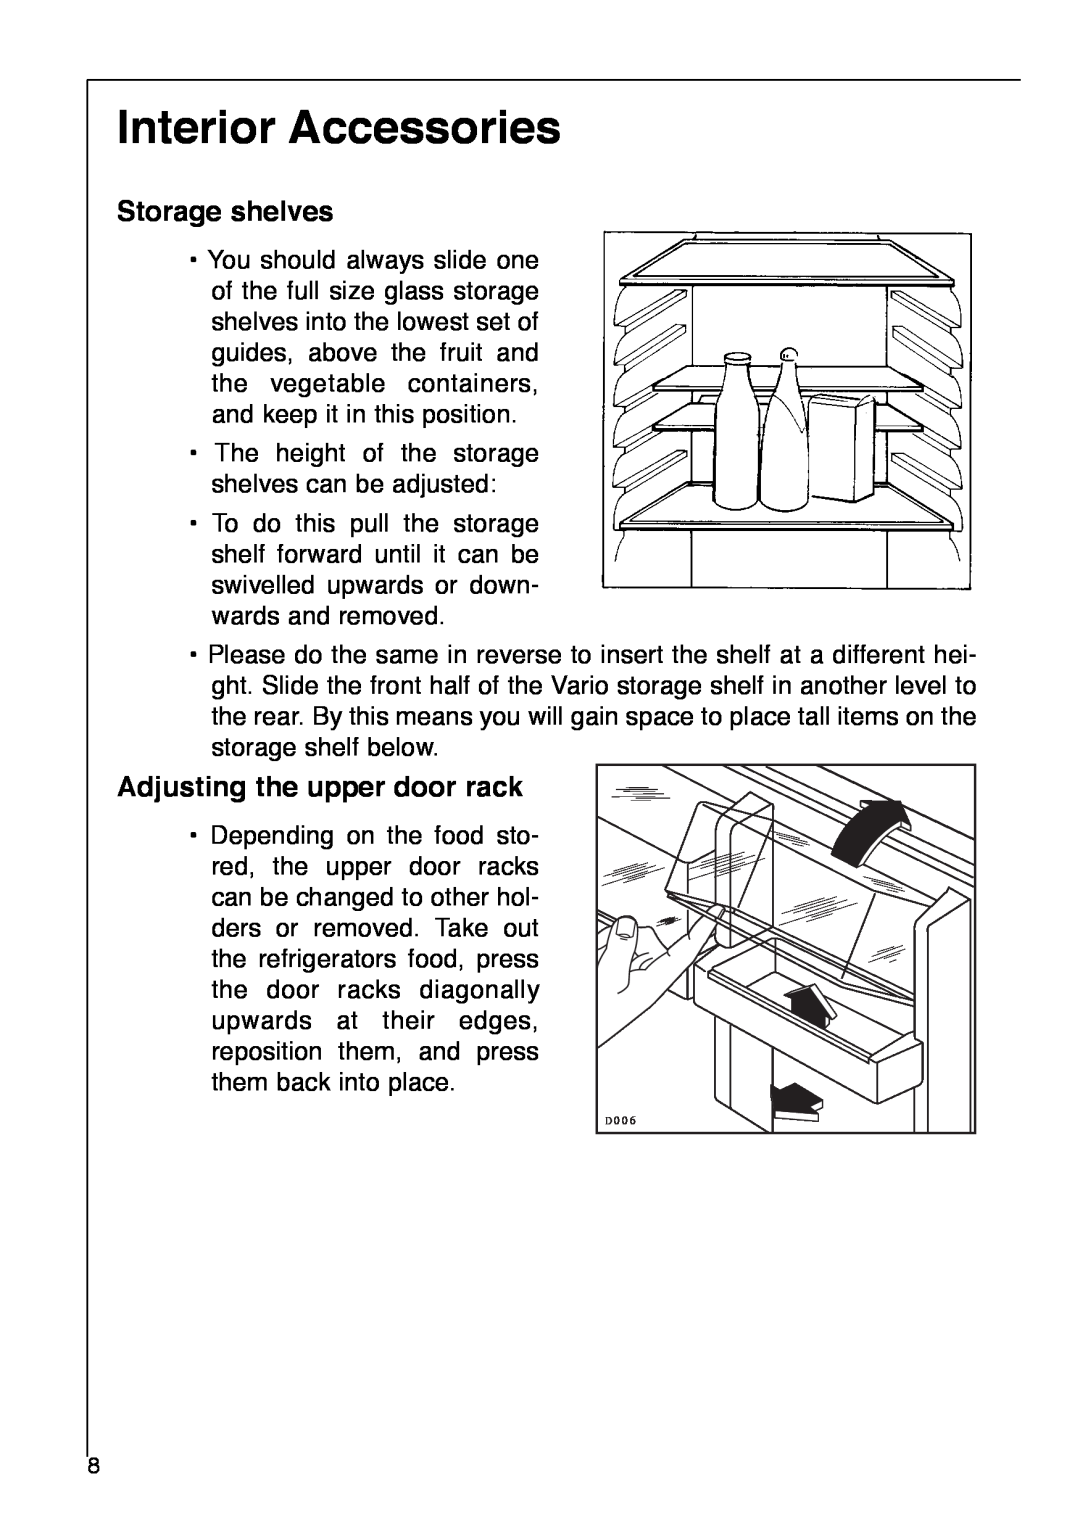 Electrolux SANTO 2842-4 i installation instructions Interior Accessories, Storage shelves, Adjusting the upper door rack 